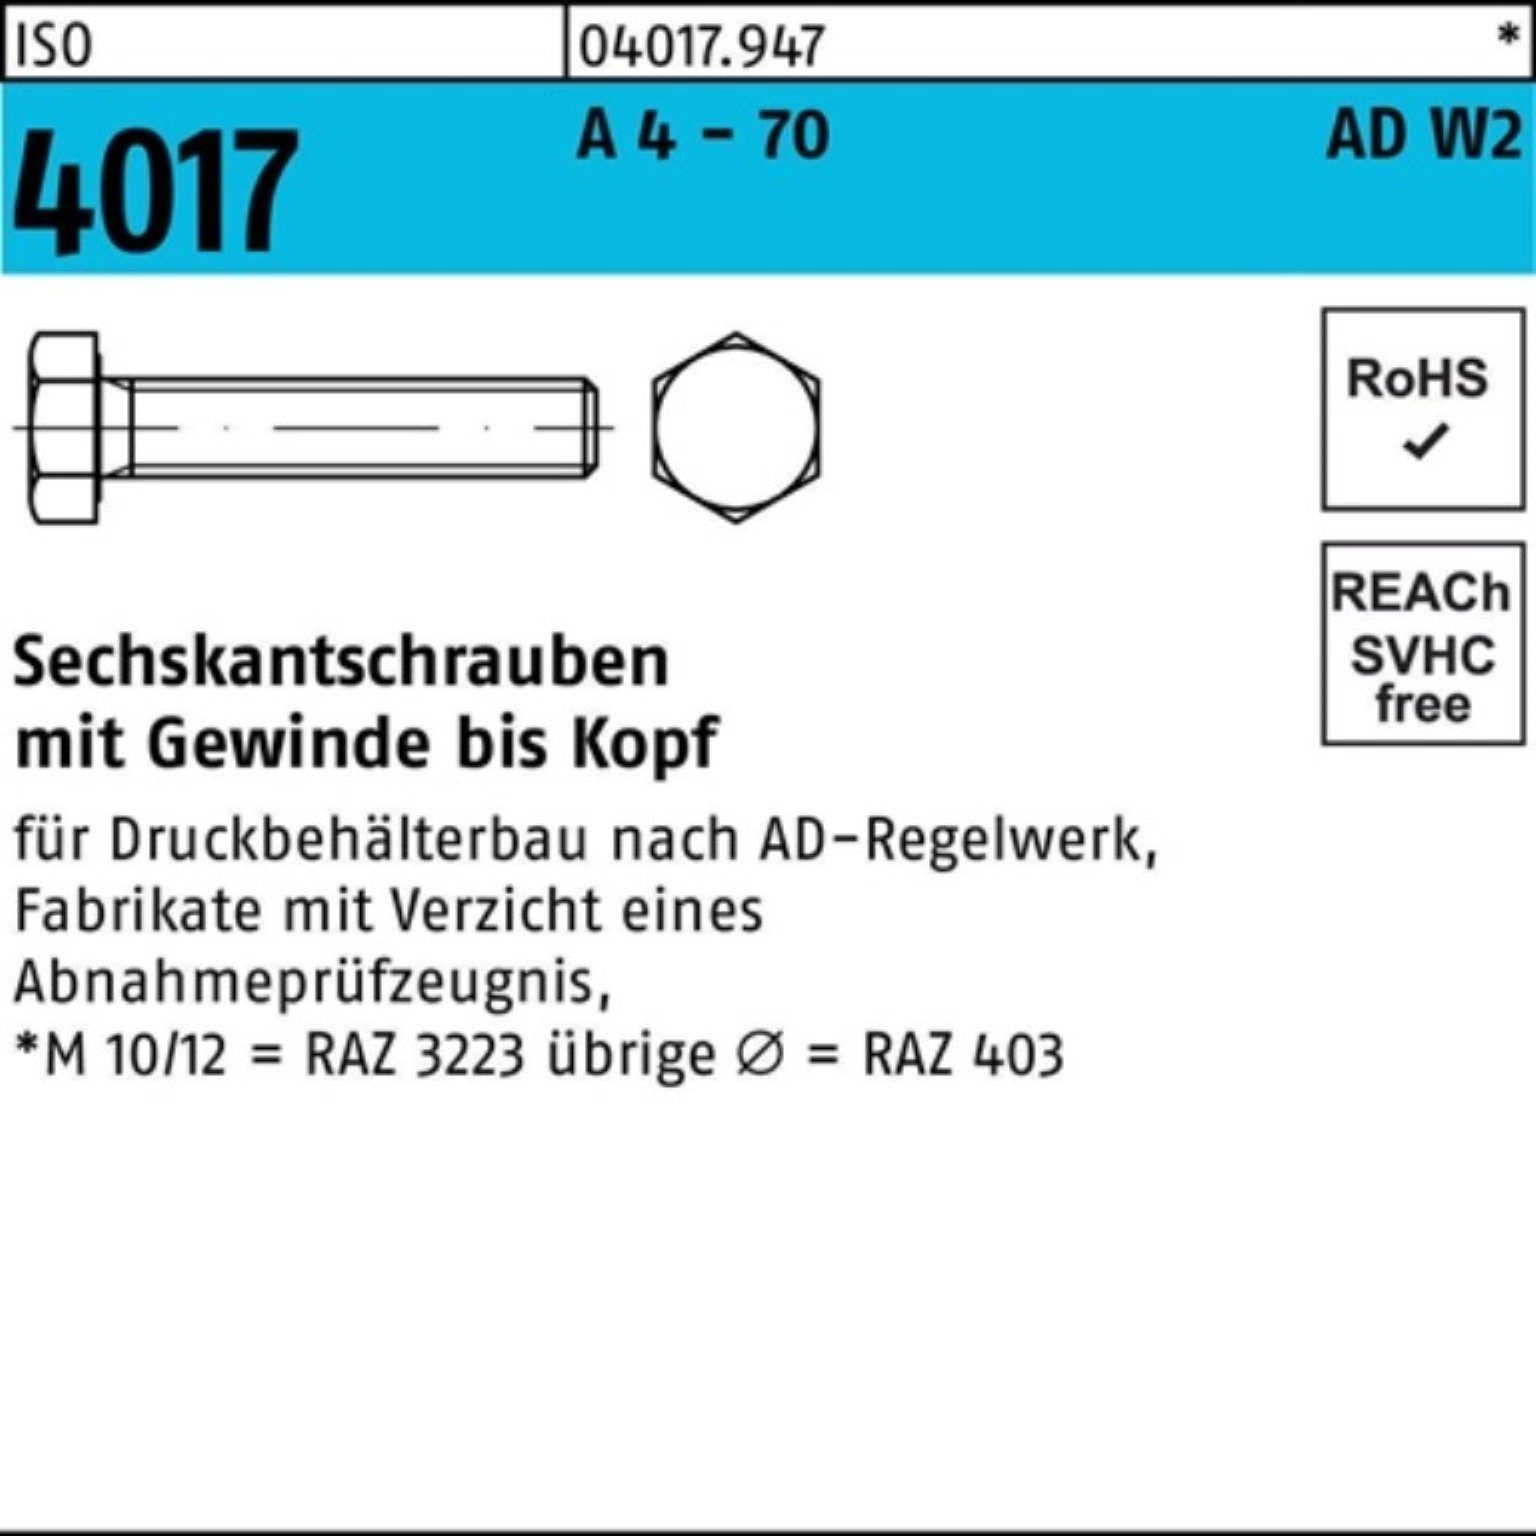 Bufab AD-W2 Sechskantschraube 4 4017 100er St Sechskantschraube A ISO - 65 25 VG M16x Pack 70